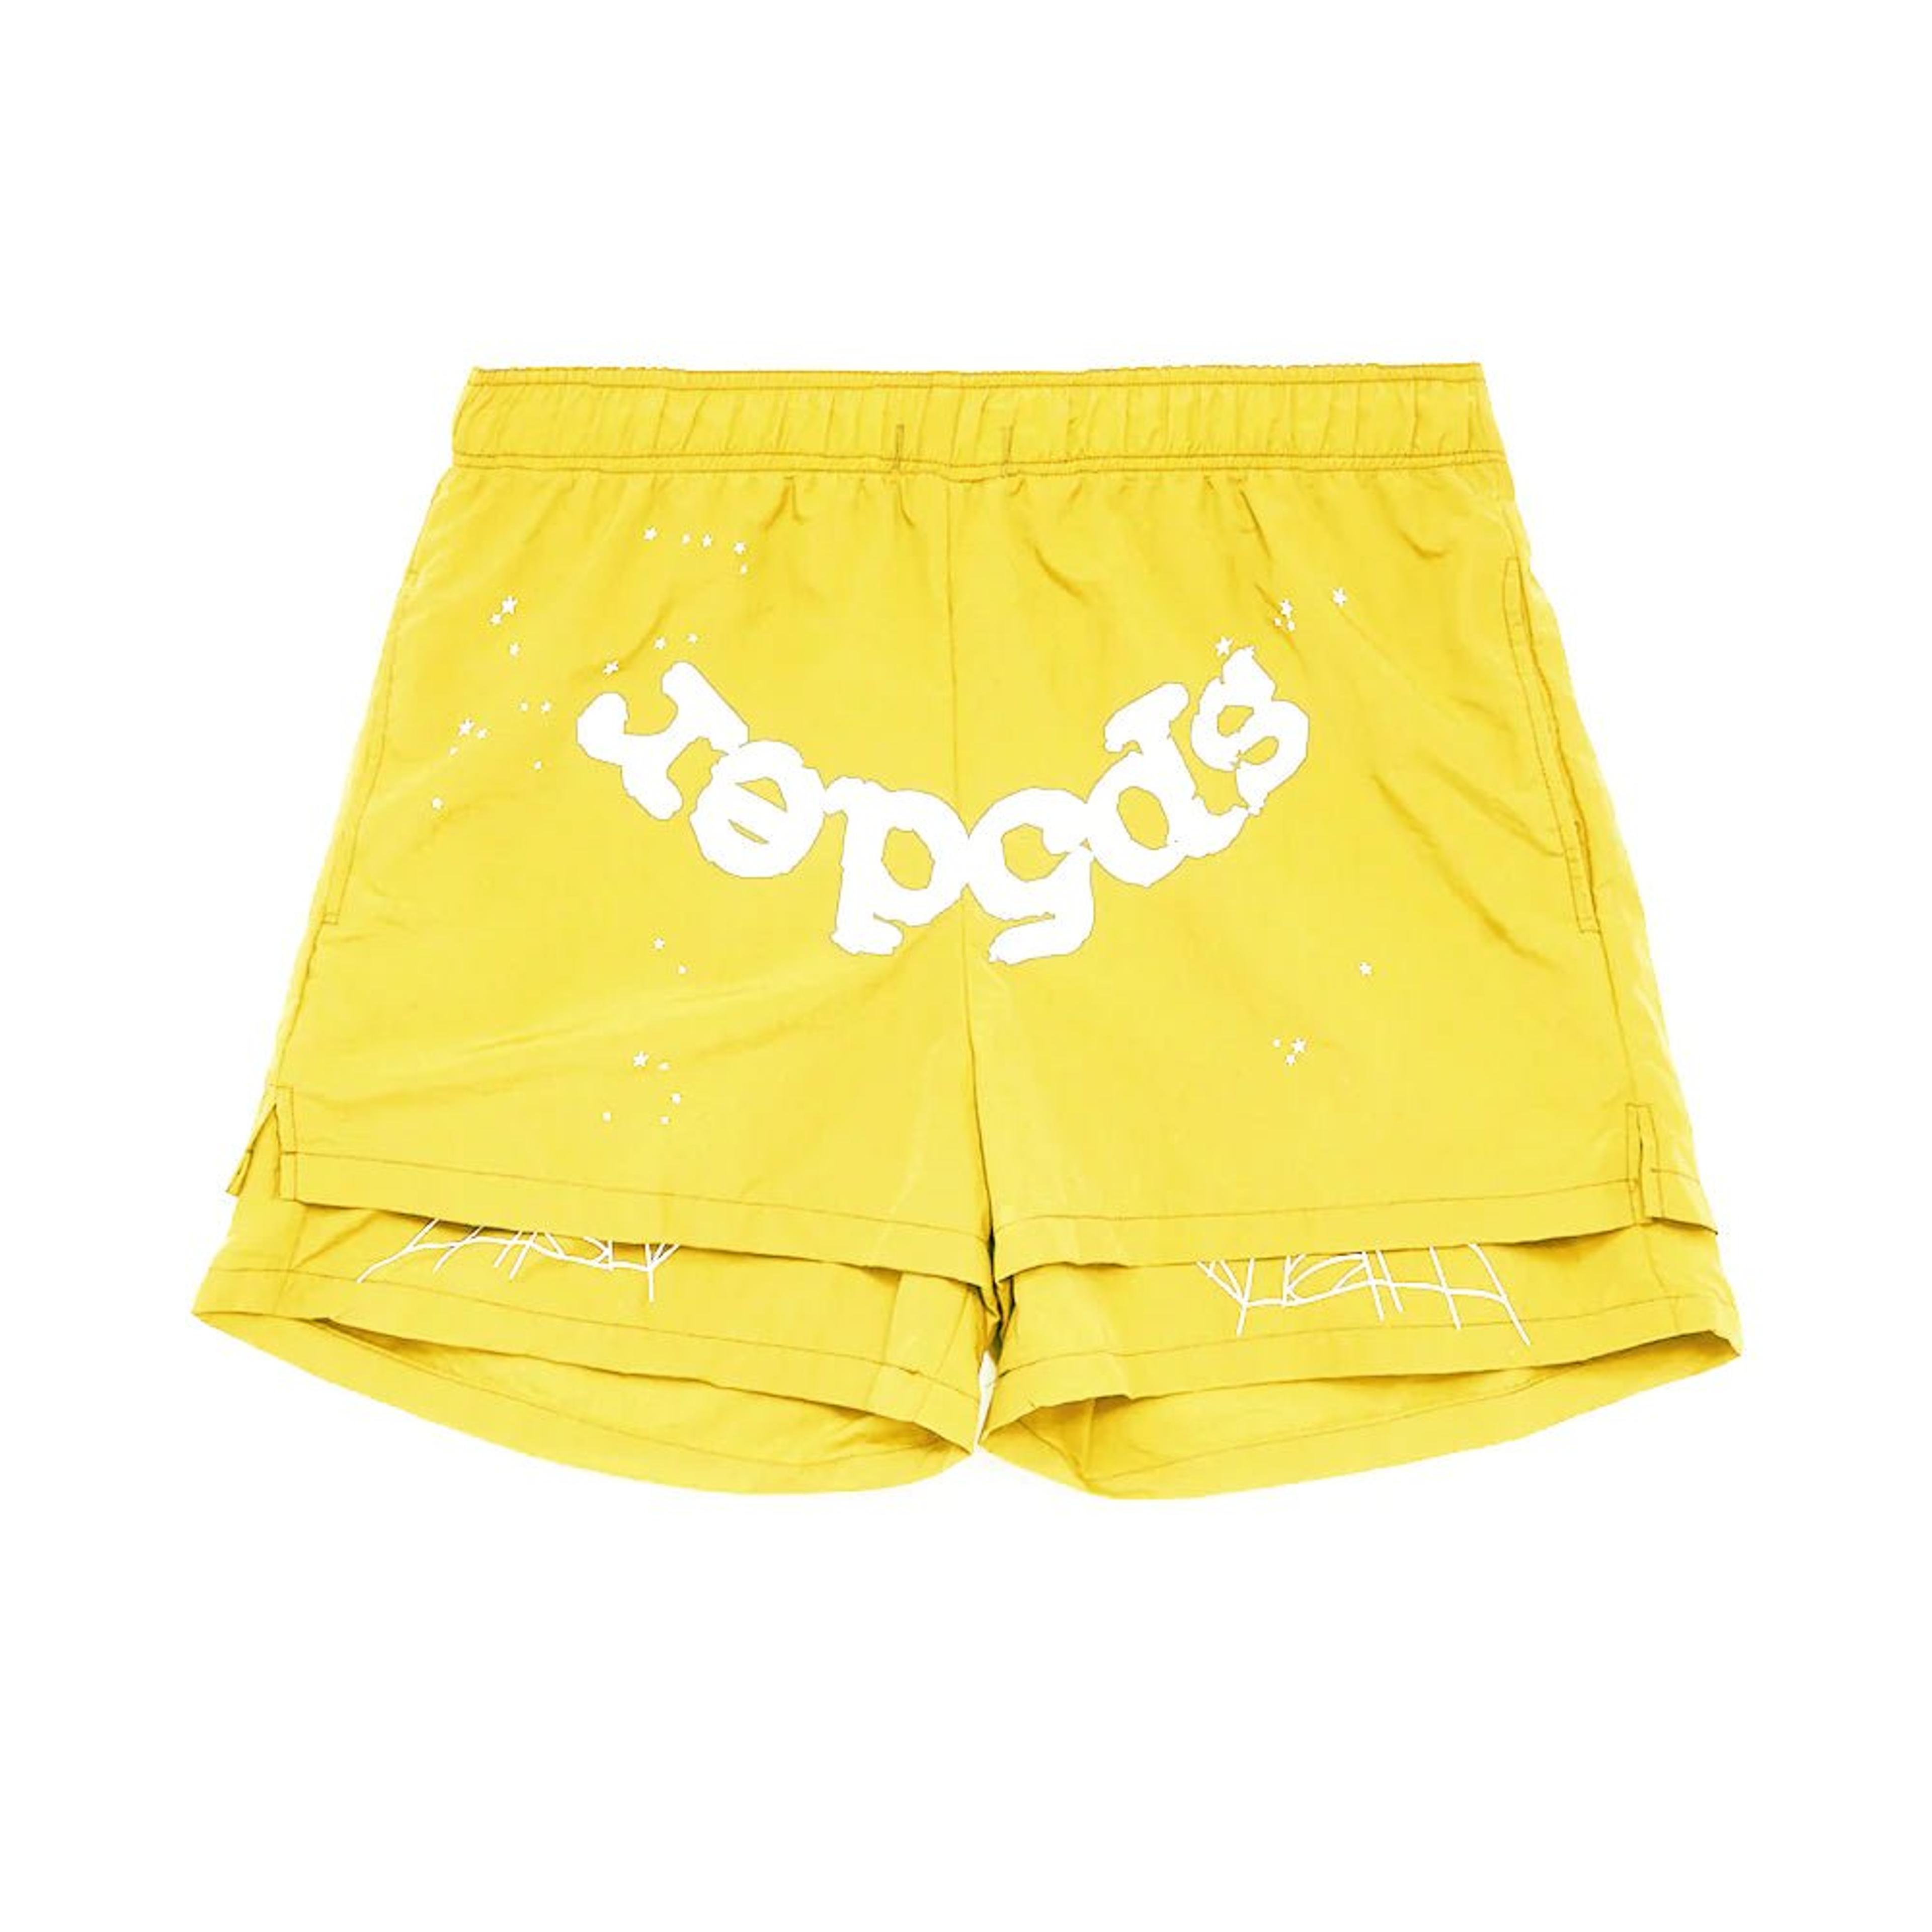 Sp5der Yellow Logo Shorts